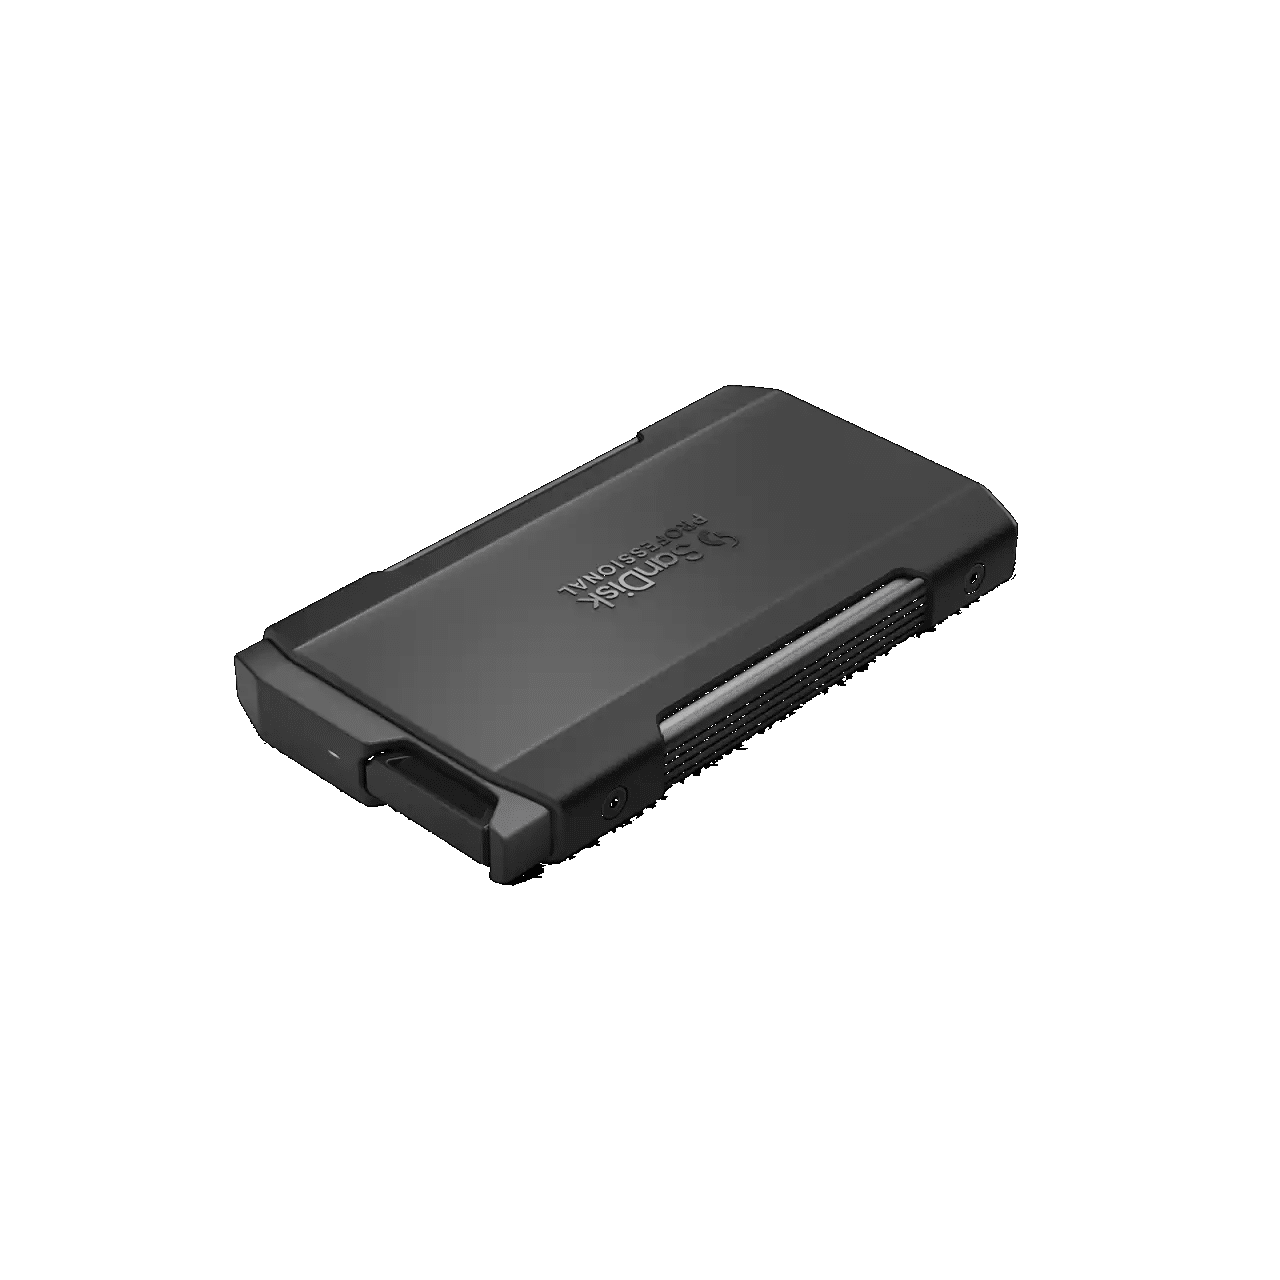 SanDisk Professional Pro-Blade: Modular SSD system introduced